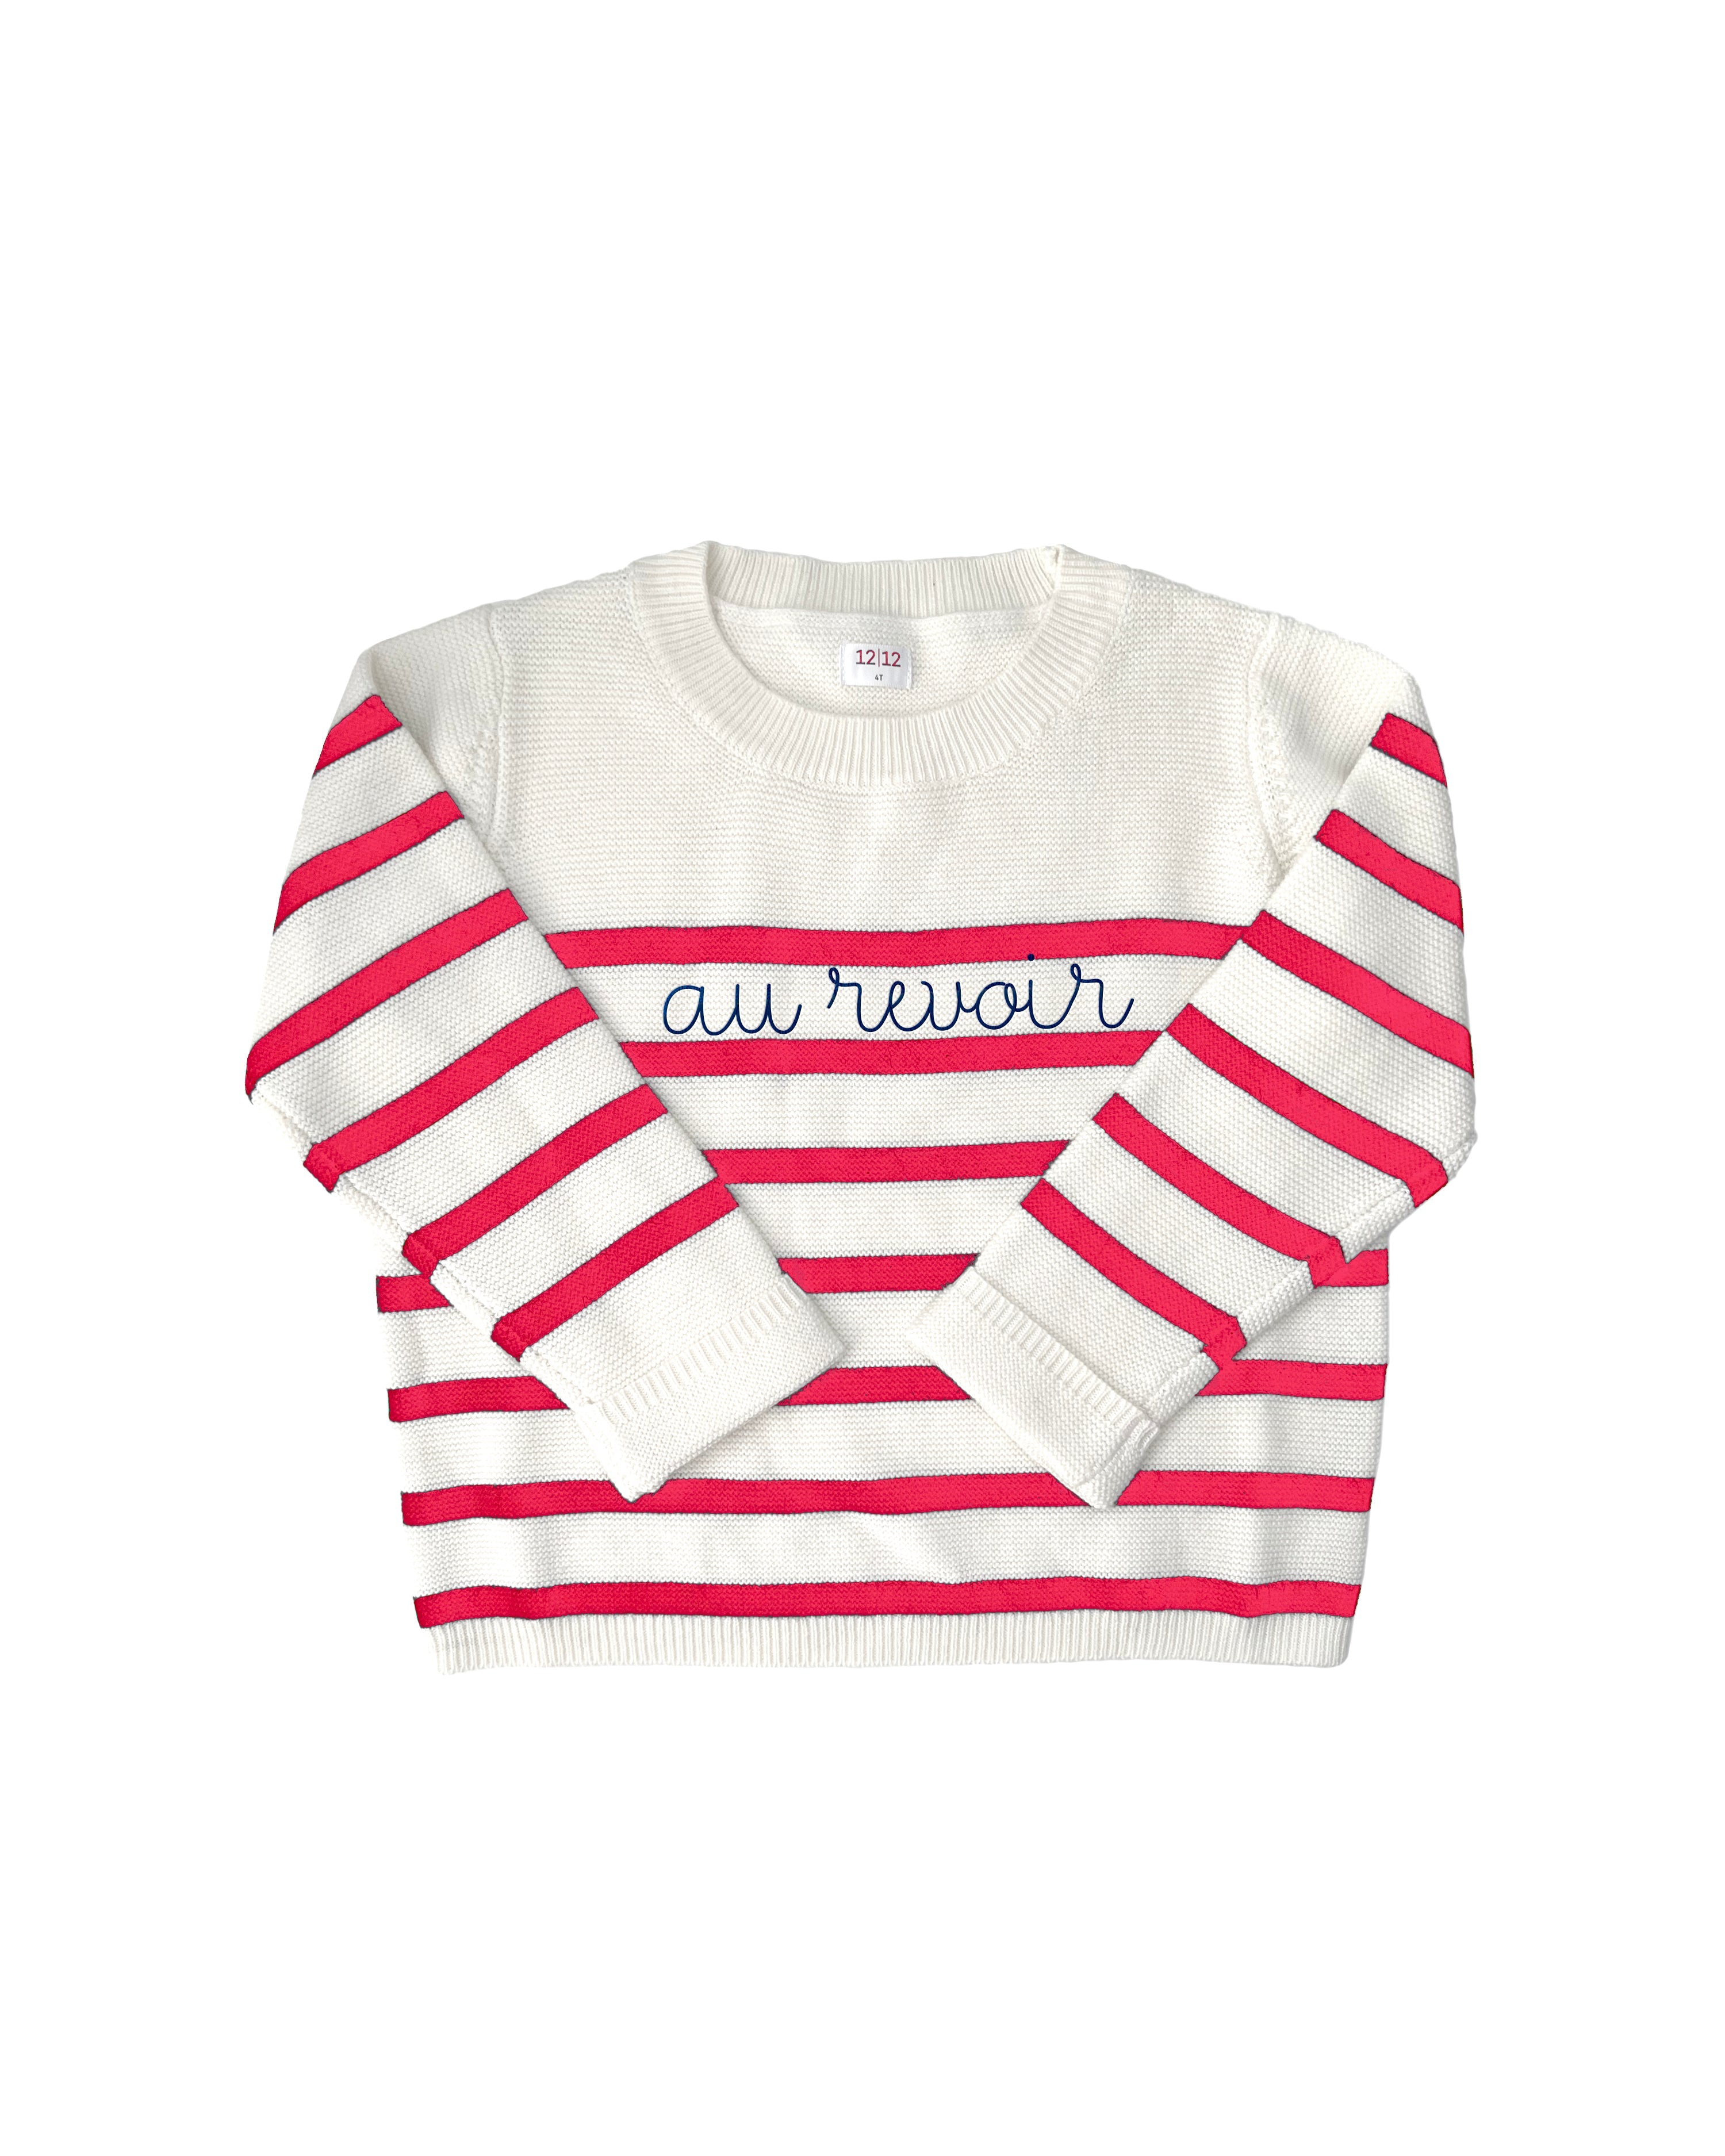 The Organic Embroidered Garter Stitch Sweater [Cream and Raspberry Stripe Au Revoir]